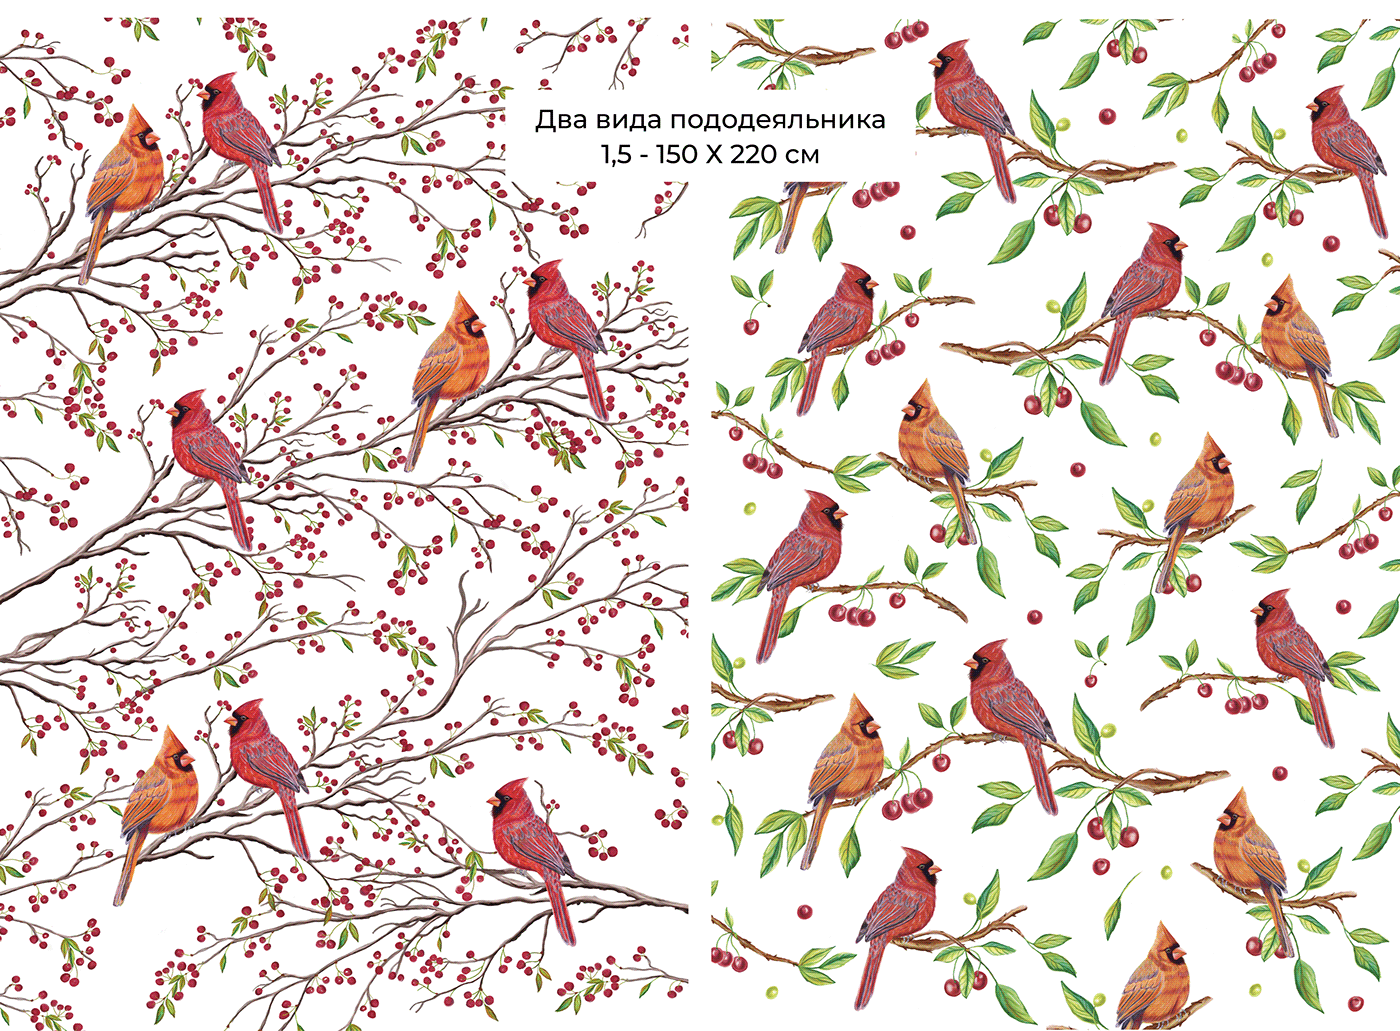 bird linen pattern print textile wallpaper паттерн постельное белье  принт текстиль